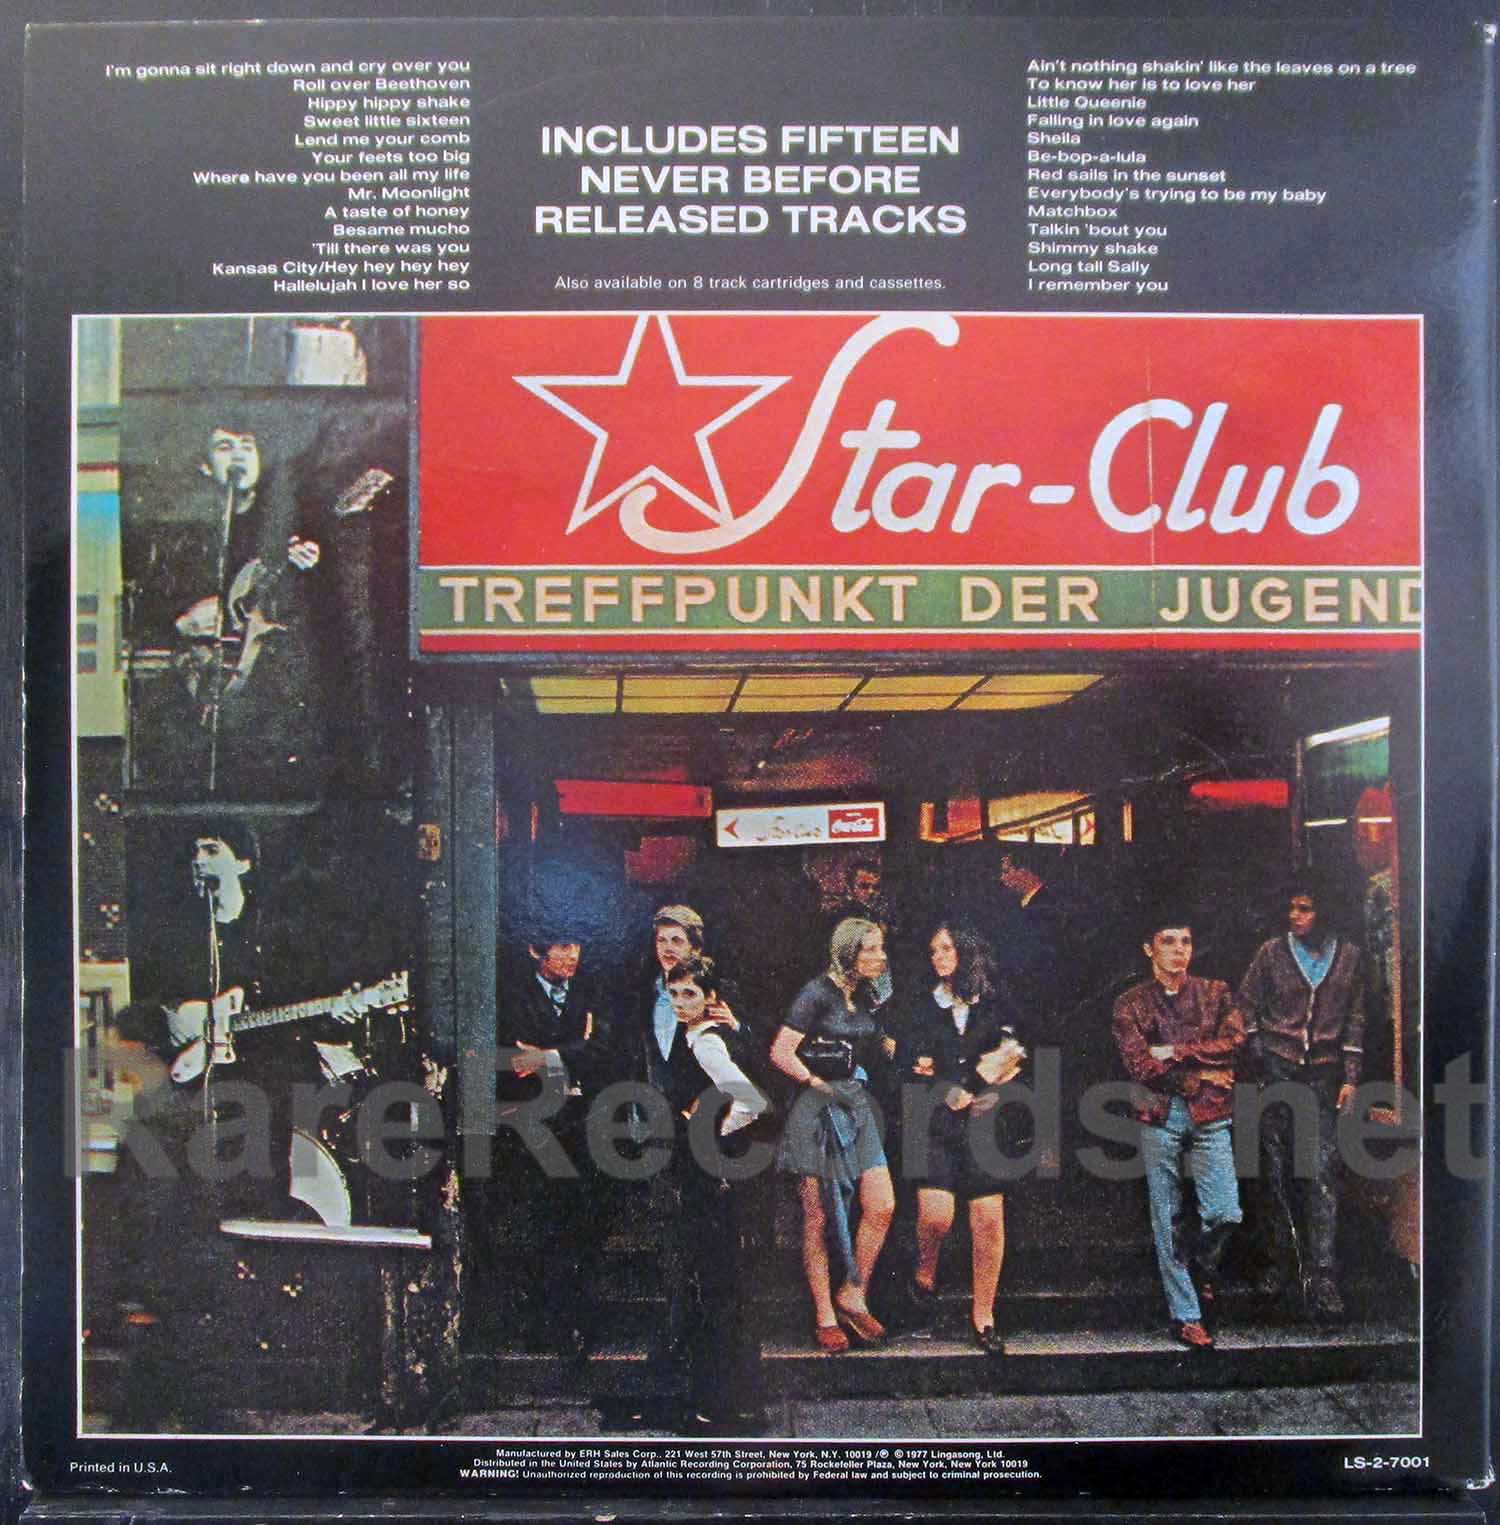 Beatles - Live at the Star Club 1977 U.S. red vinyl promotional 2 LP set